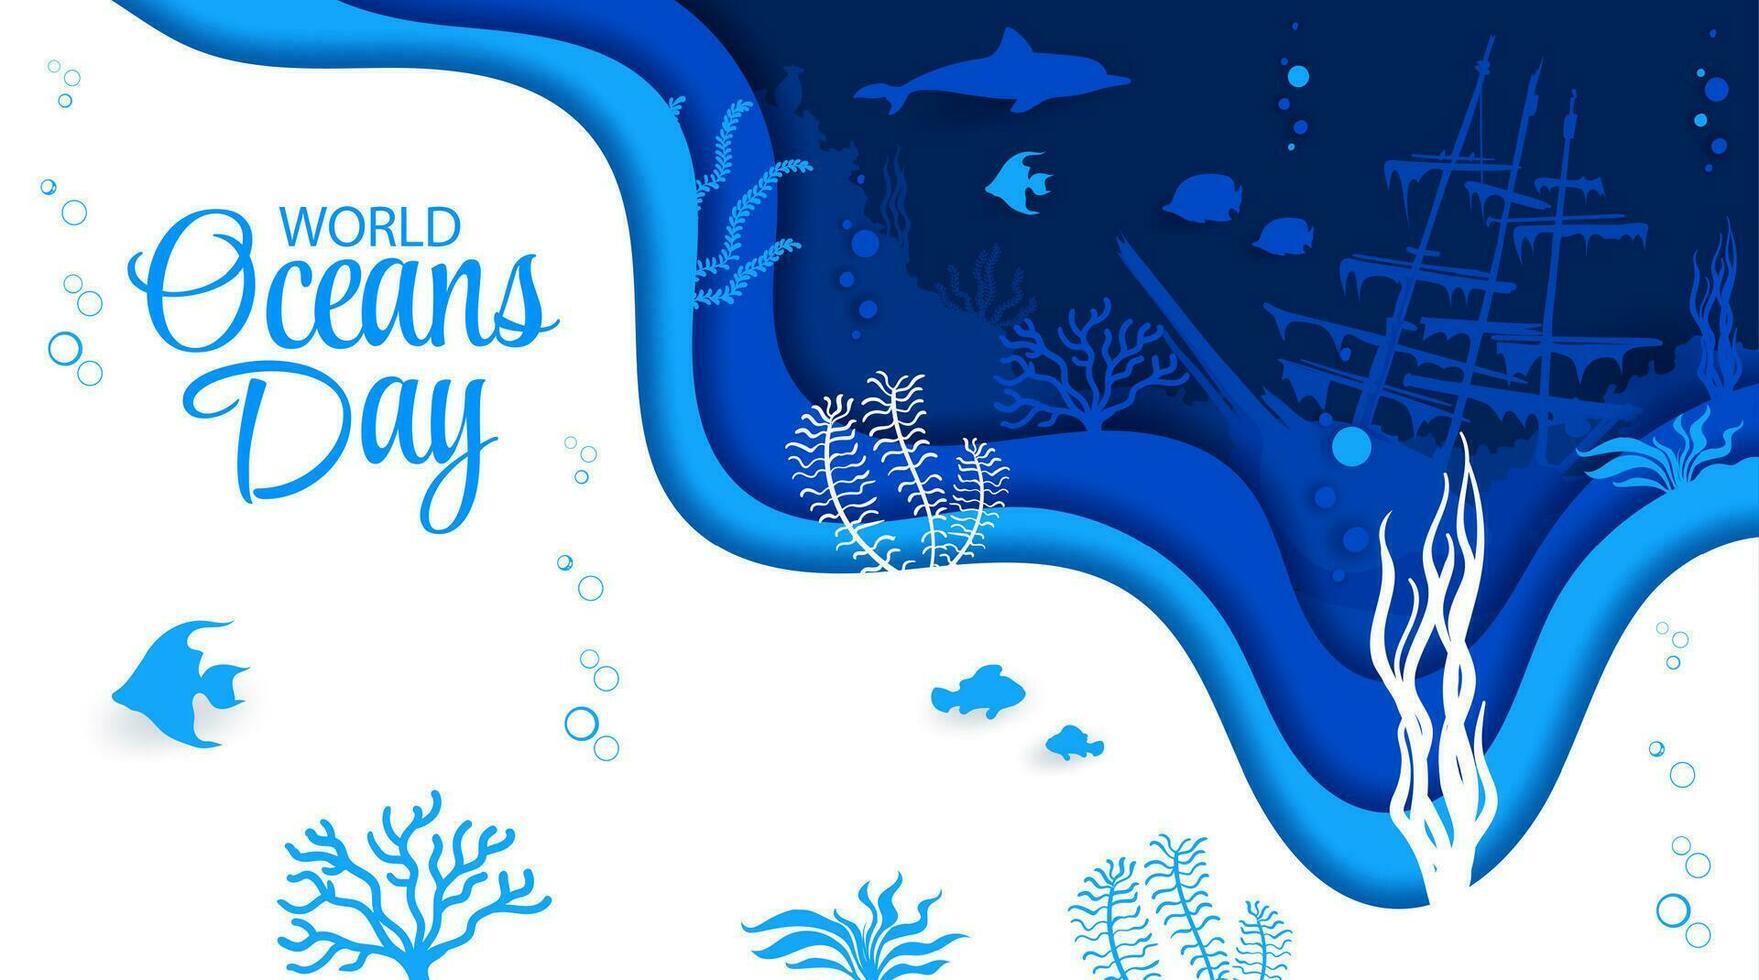 World oceans day banner. Sea paper cut landscape vector